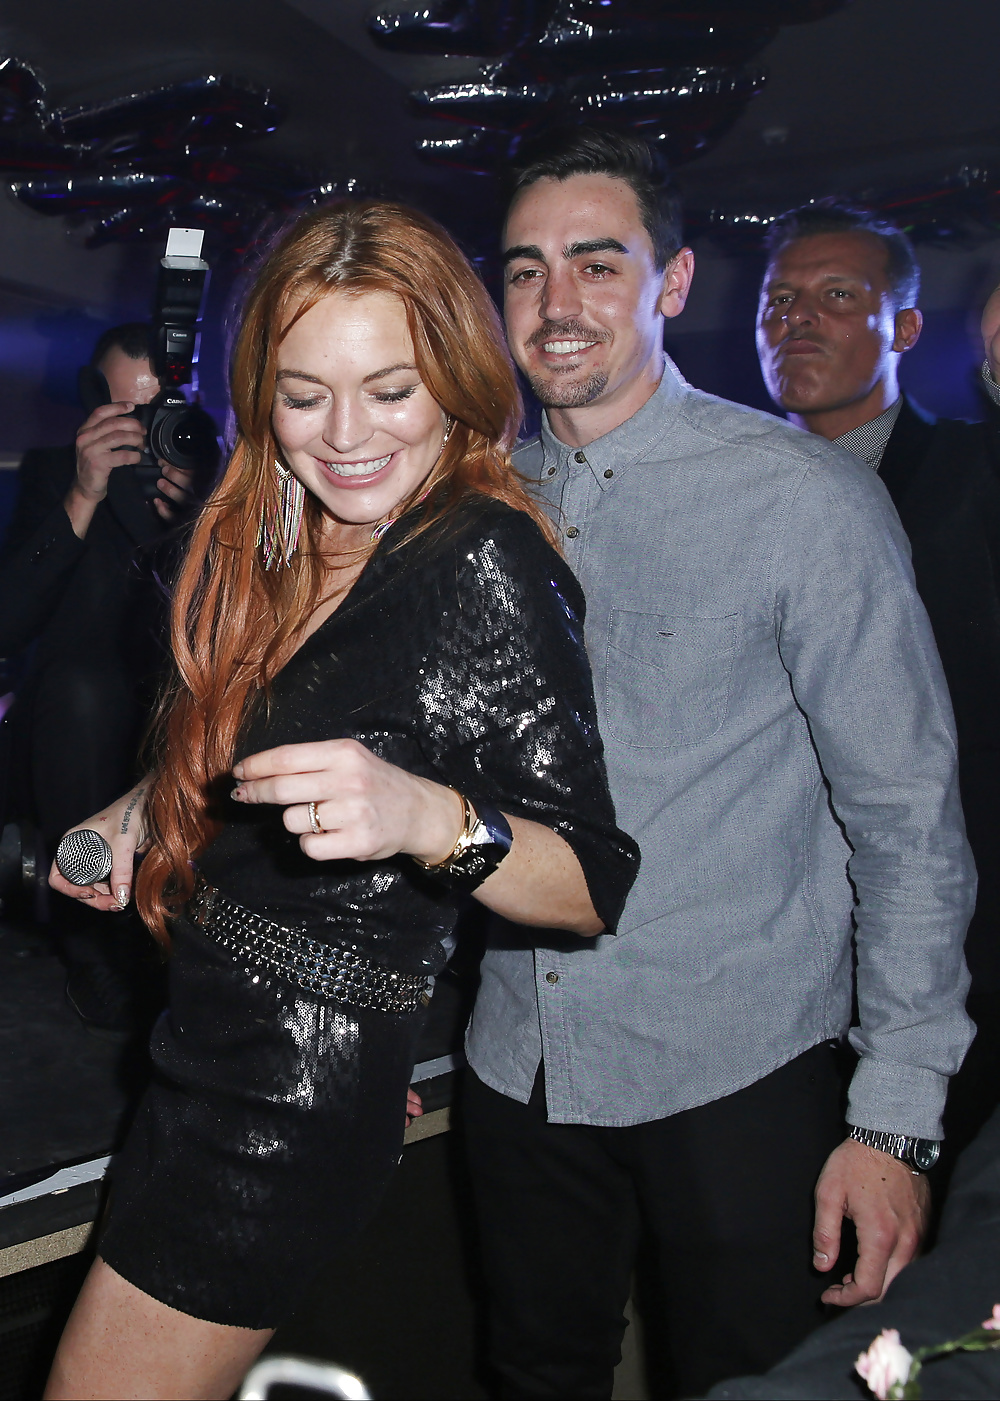 Lindsay Lohan ... At The VIP Room Nightclub #33189787